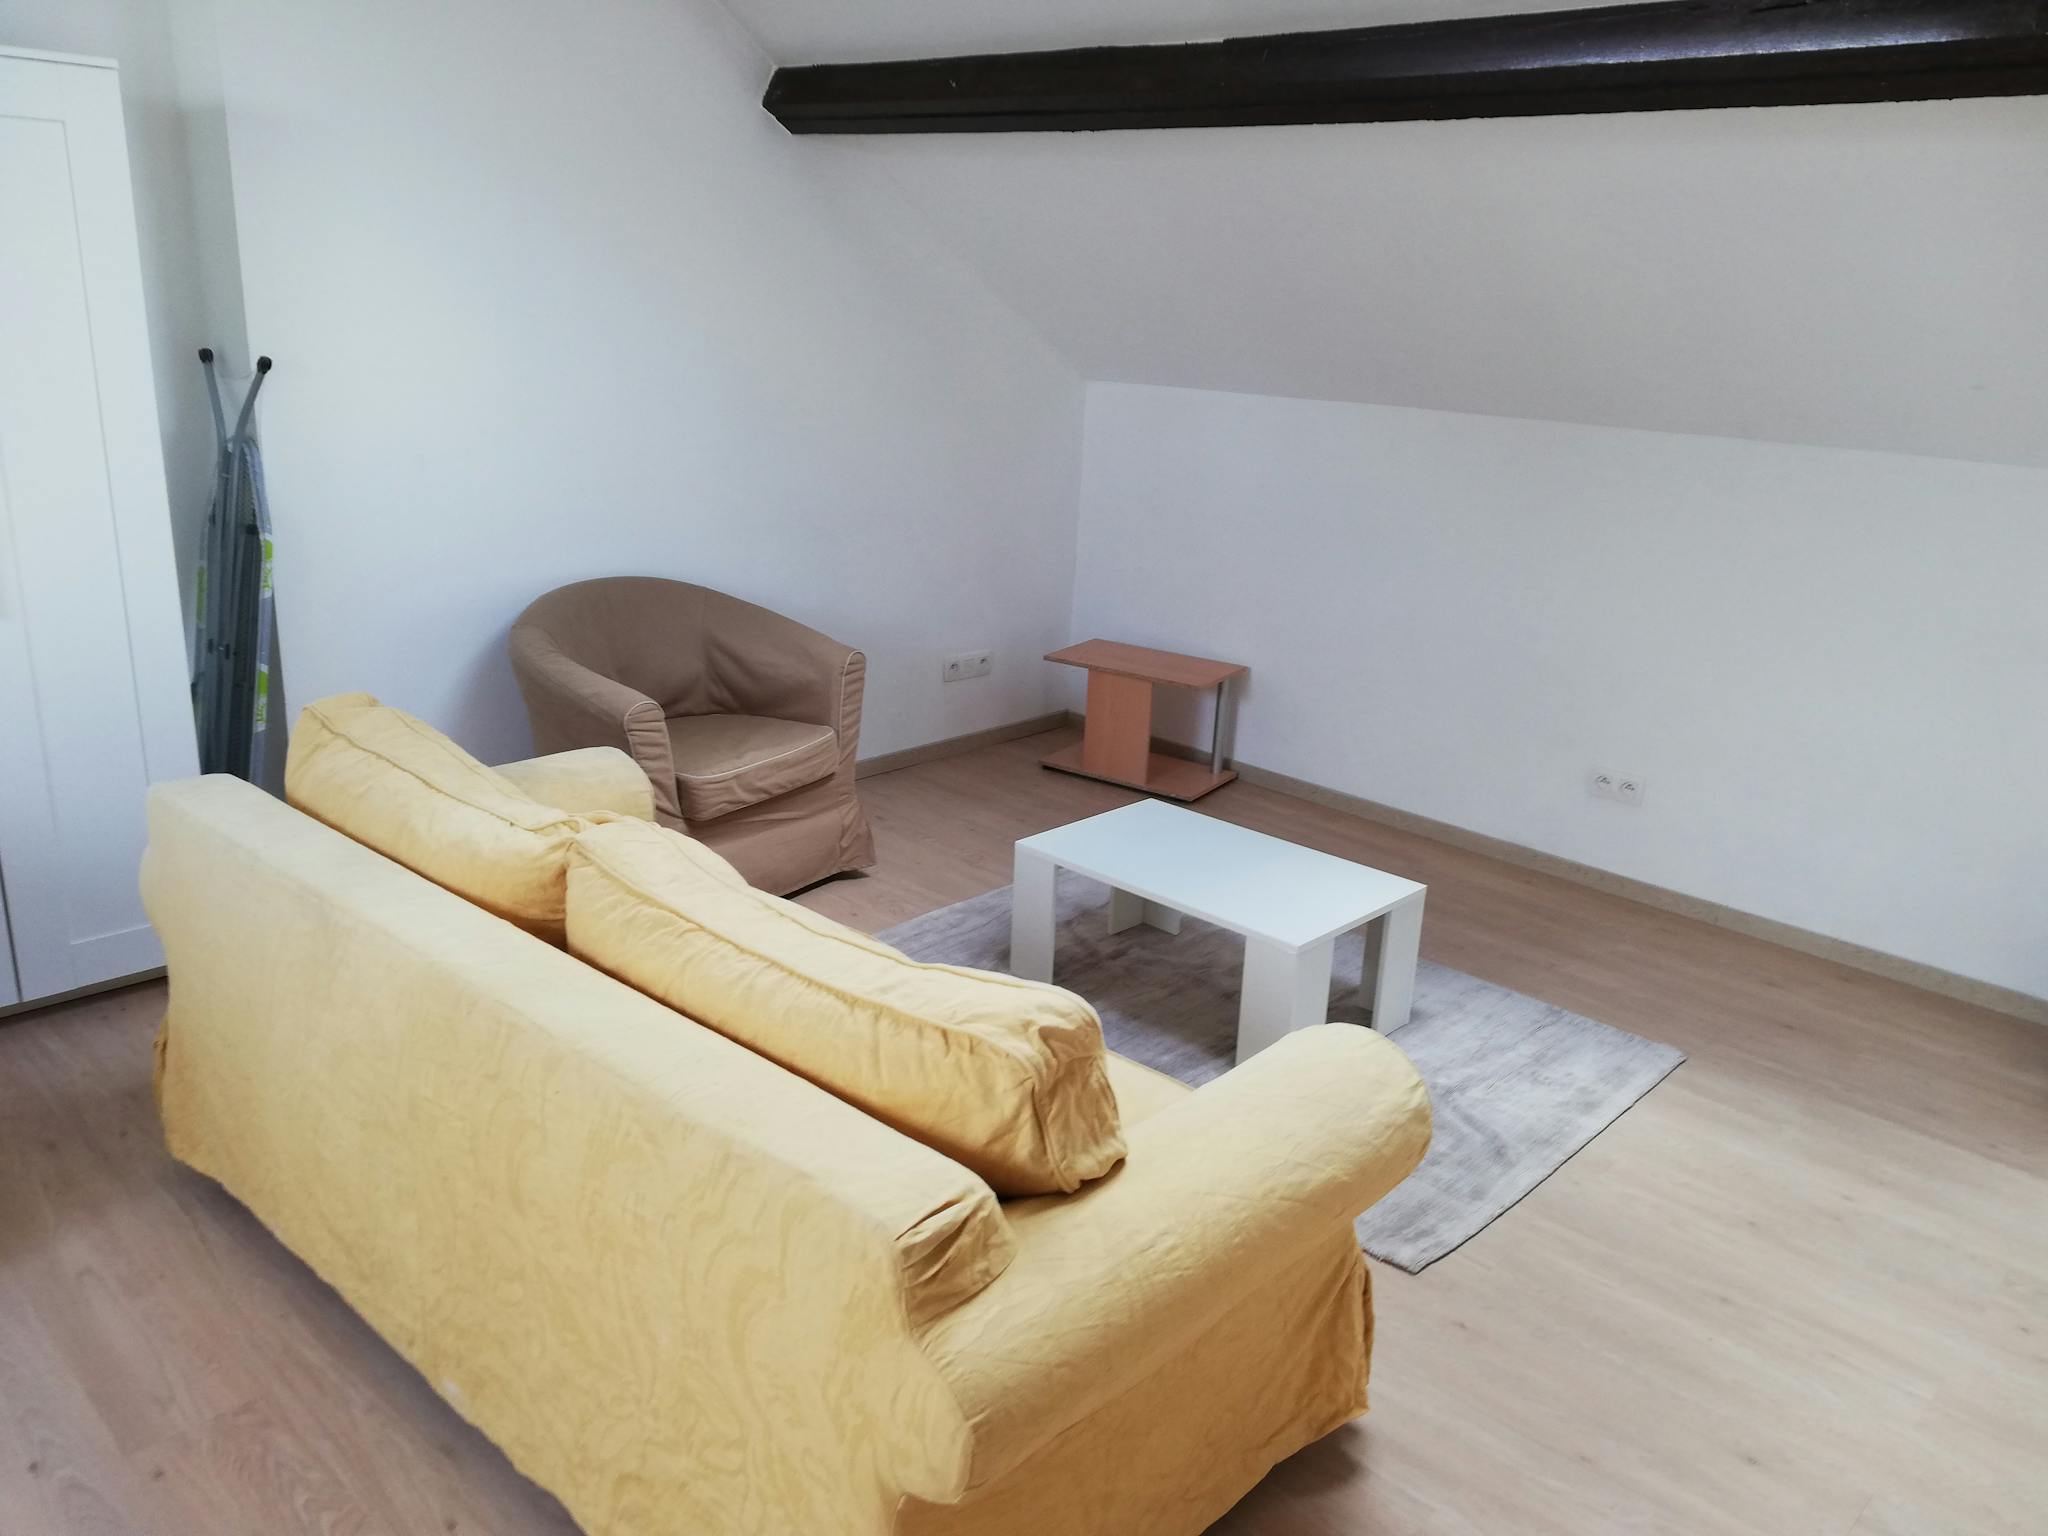 Appartement te  huur in Sint-Agatha-Berchem 1082 800.00€ 0 slaapkamers 35.00m² - Zoekertje 83060